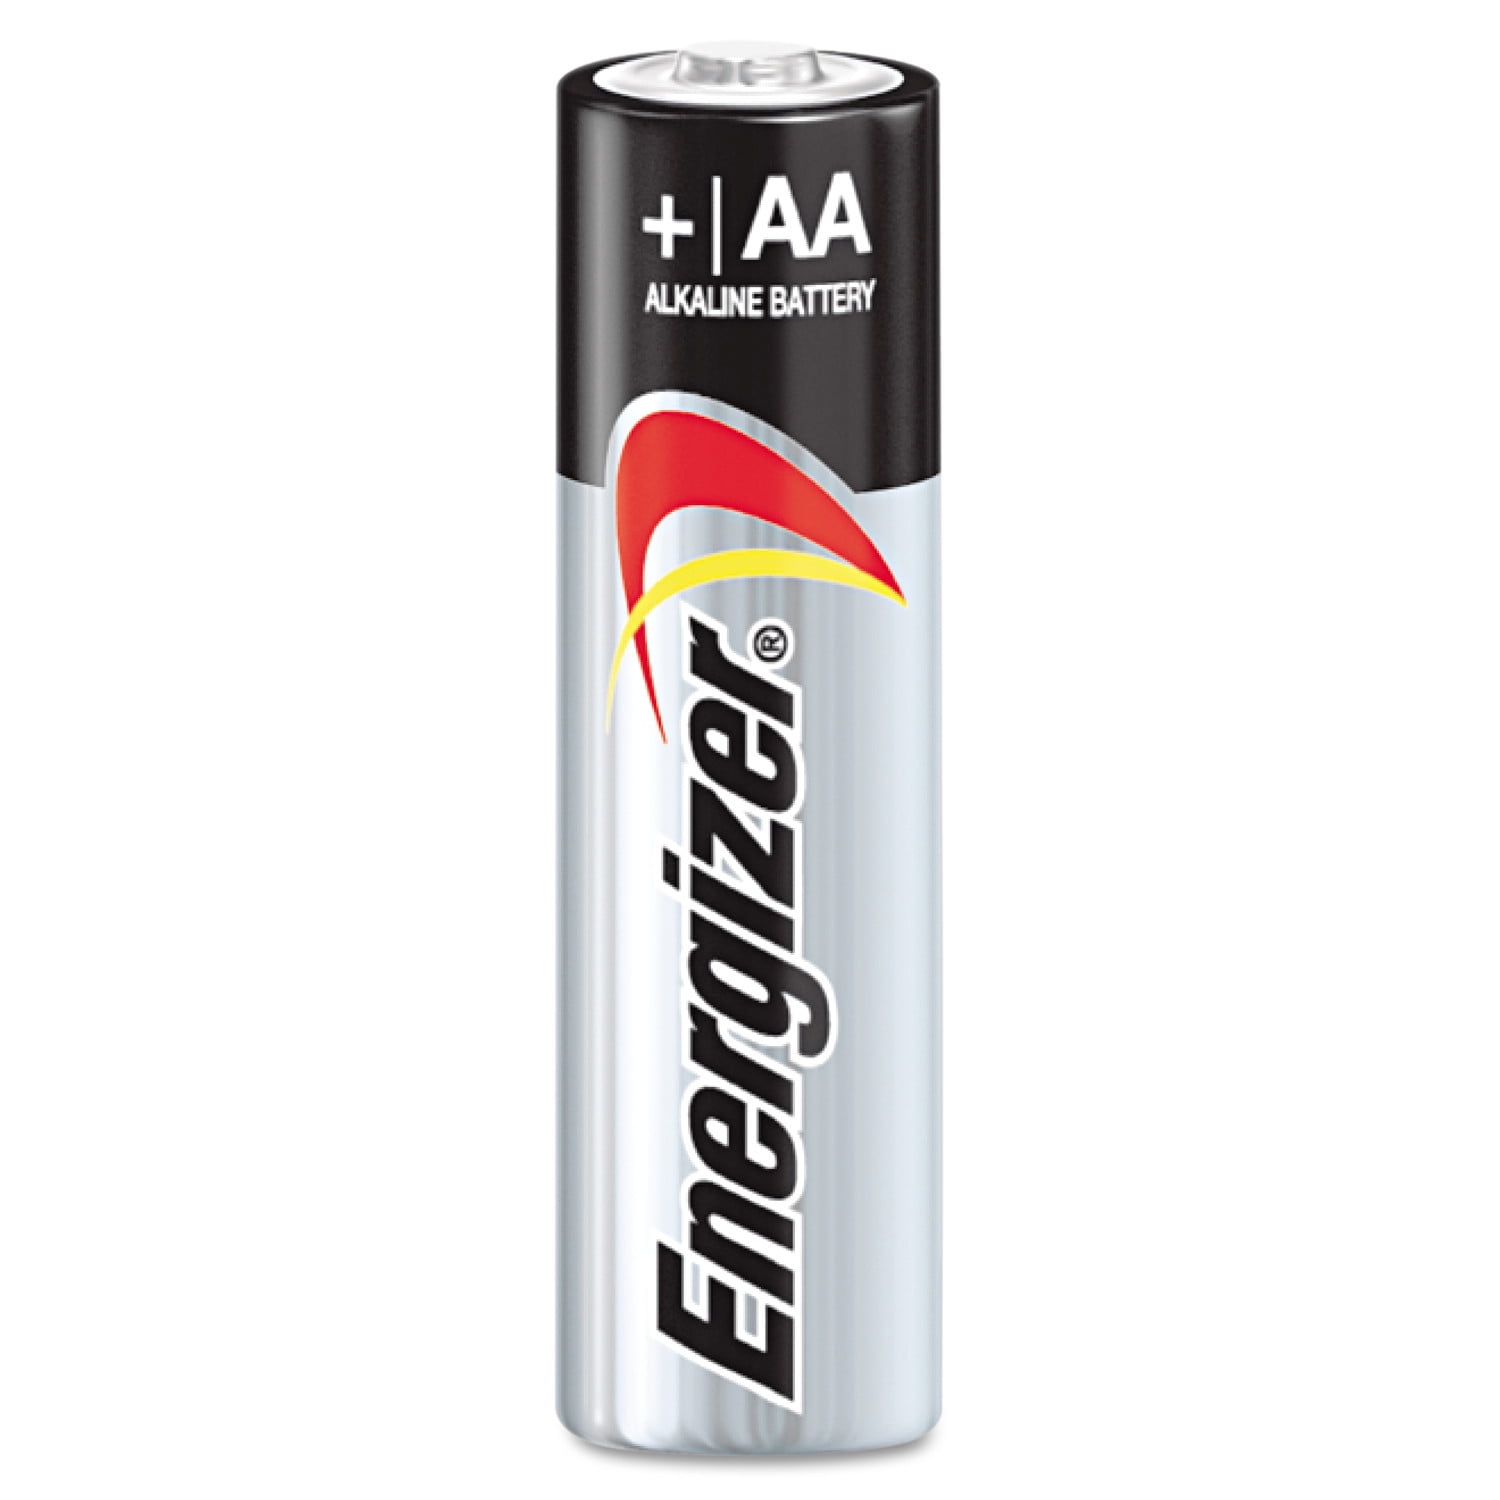 Tochi boom Droogte Bloesem Energizer MAX Alkaline, AA Batteries, 12 Pack - Walmart.com